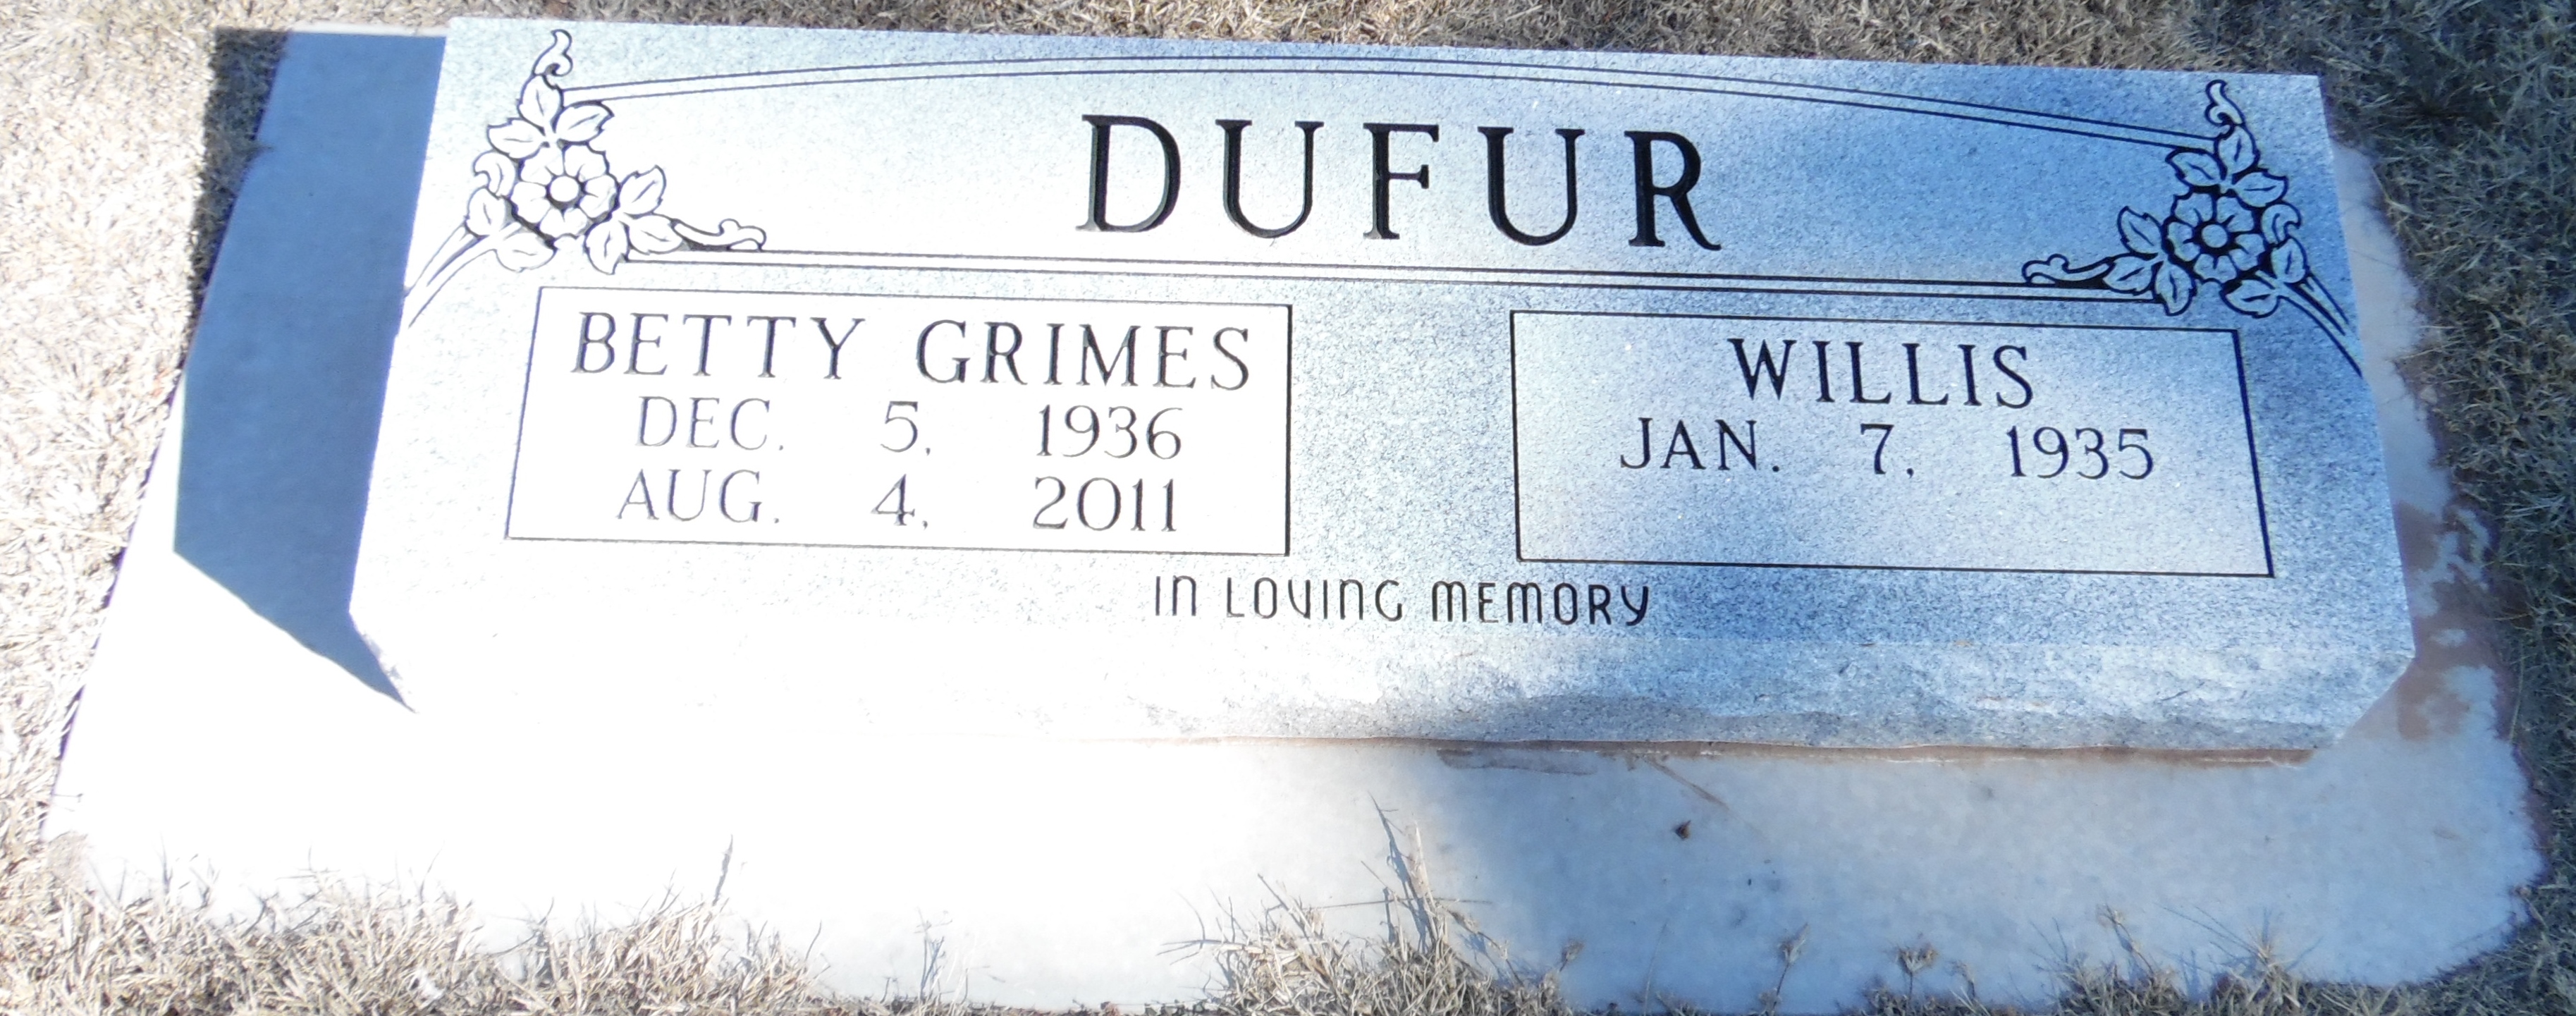 Betty Grimes Dufur (1936-2011)